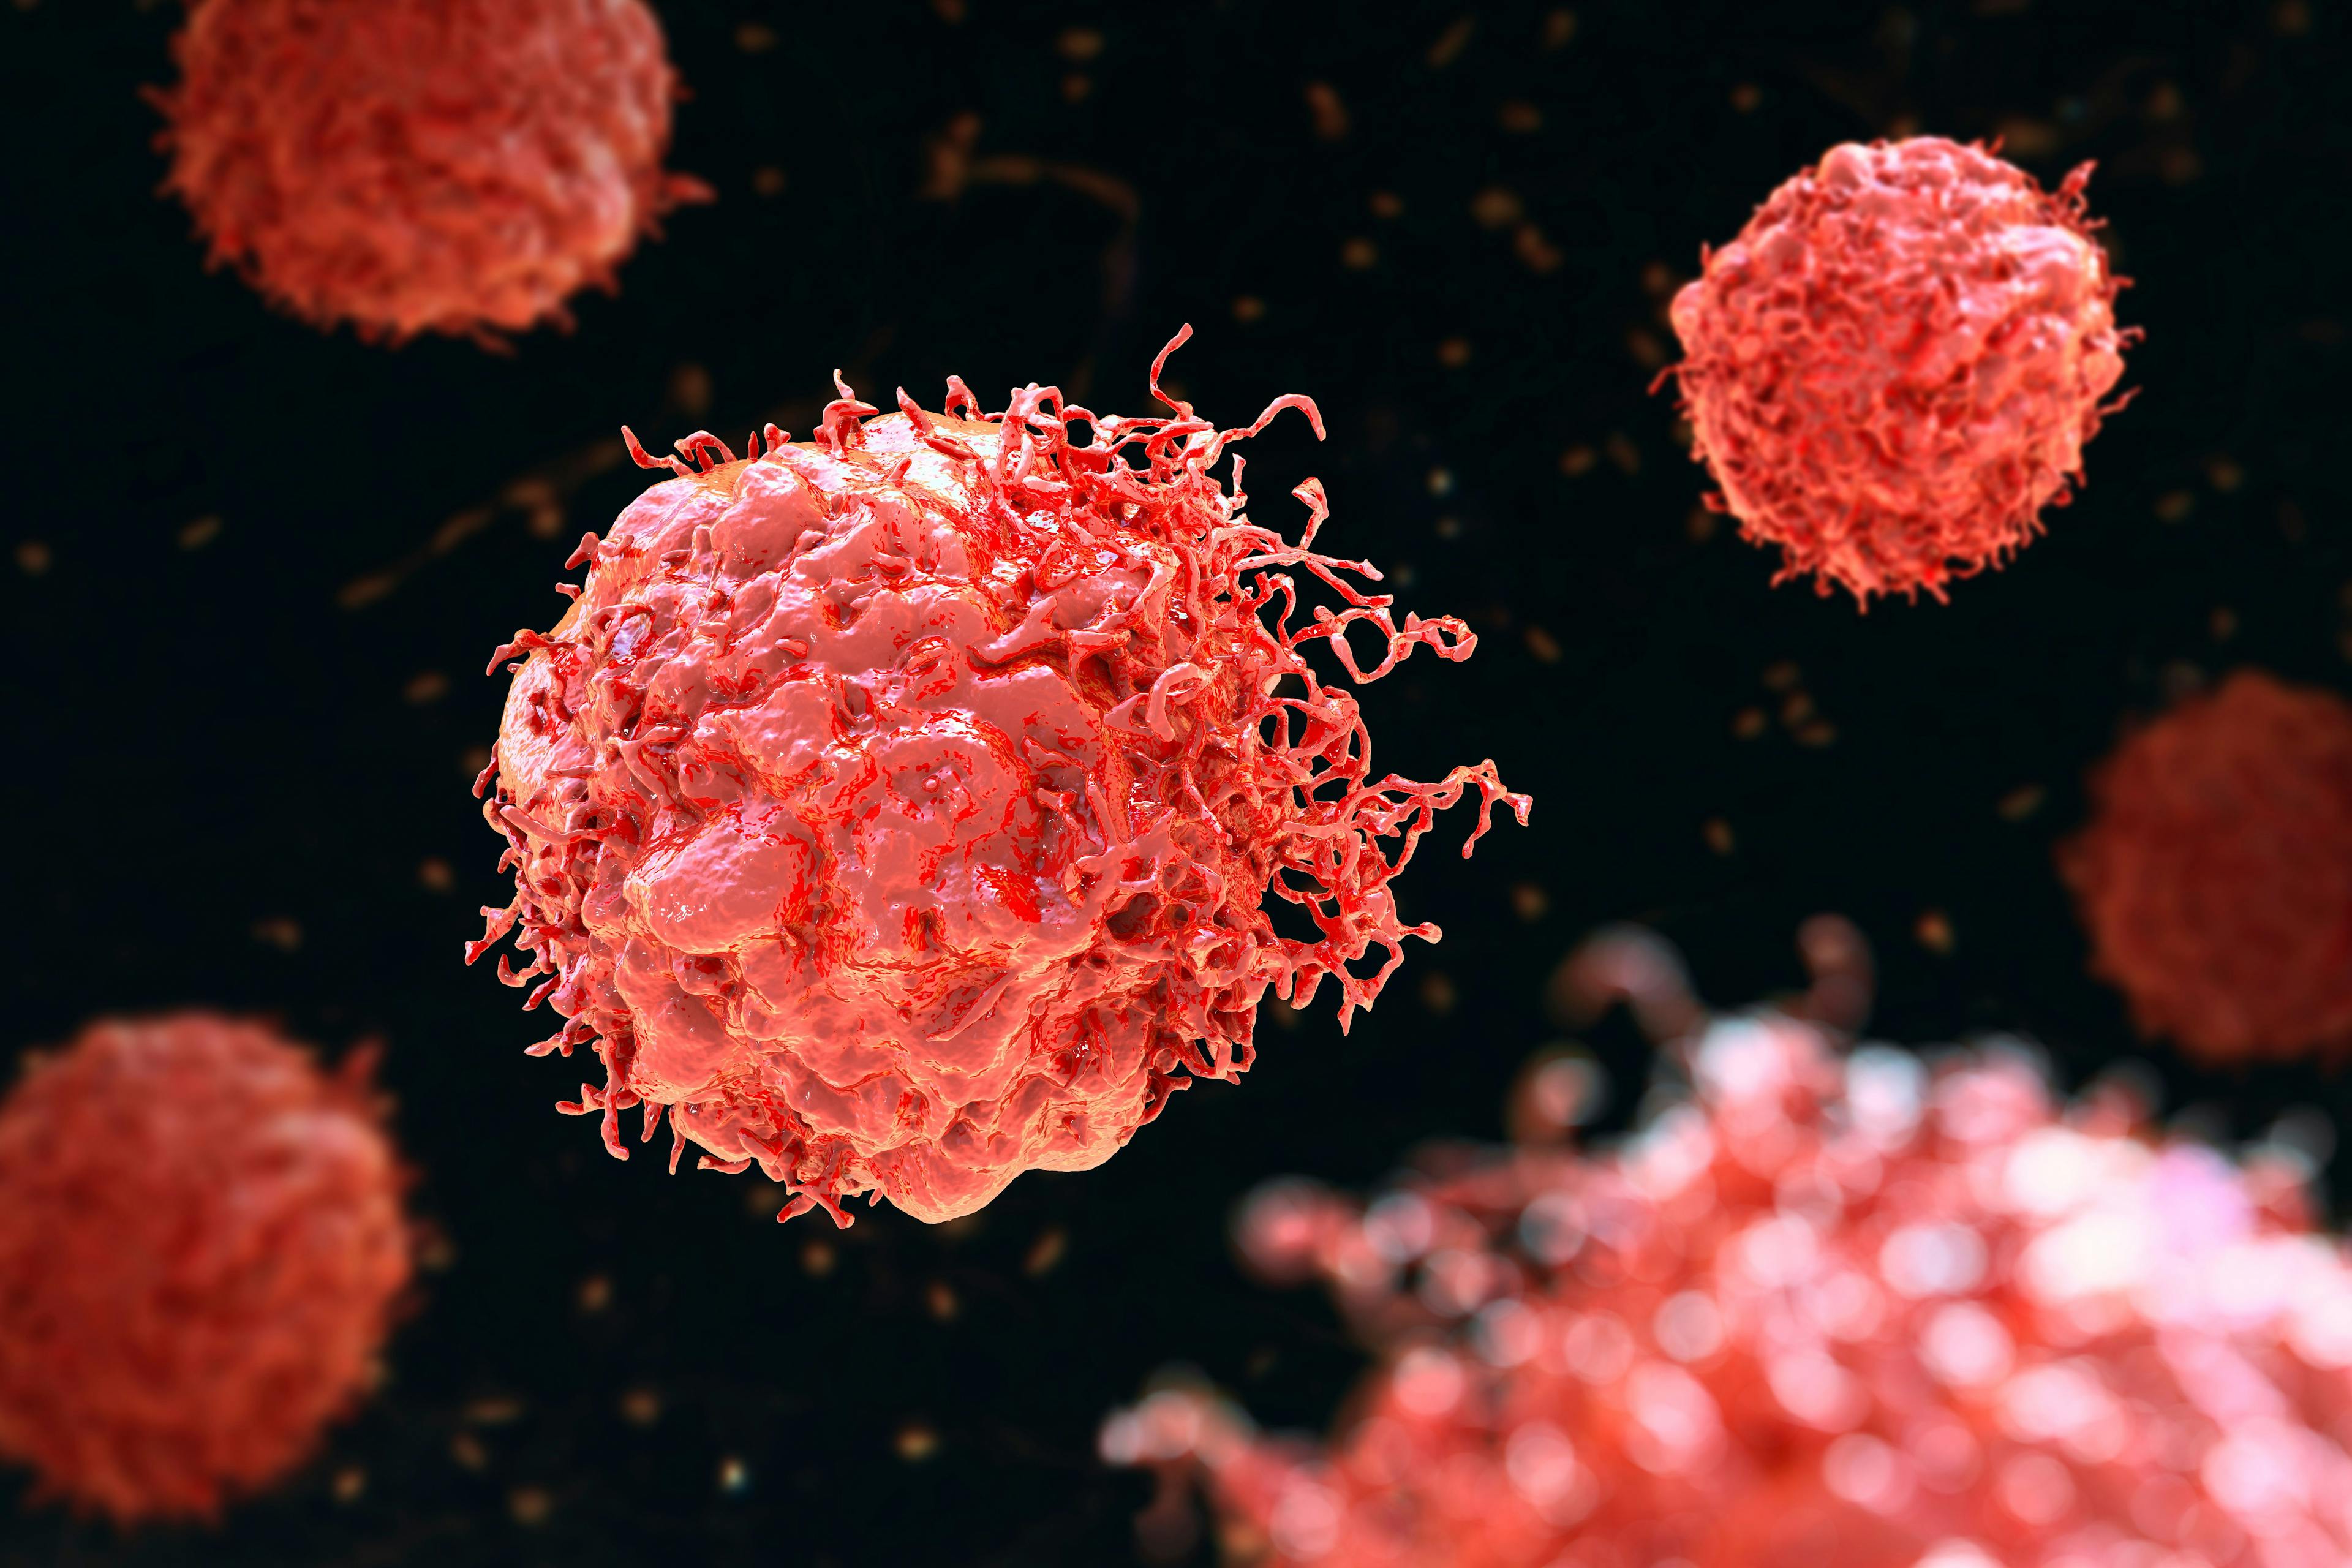 Cancer cells, 3D illustration | Image Credit: © Dr_Microbe - www.stock.adobe.com